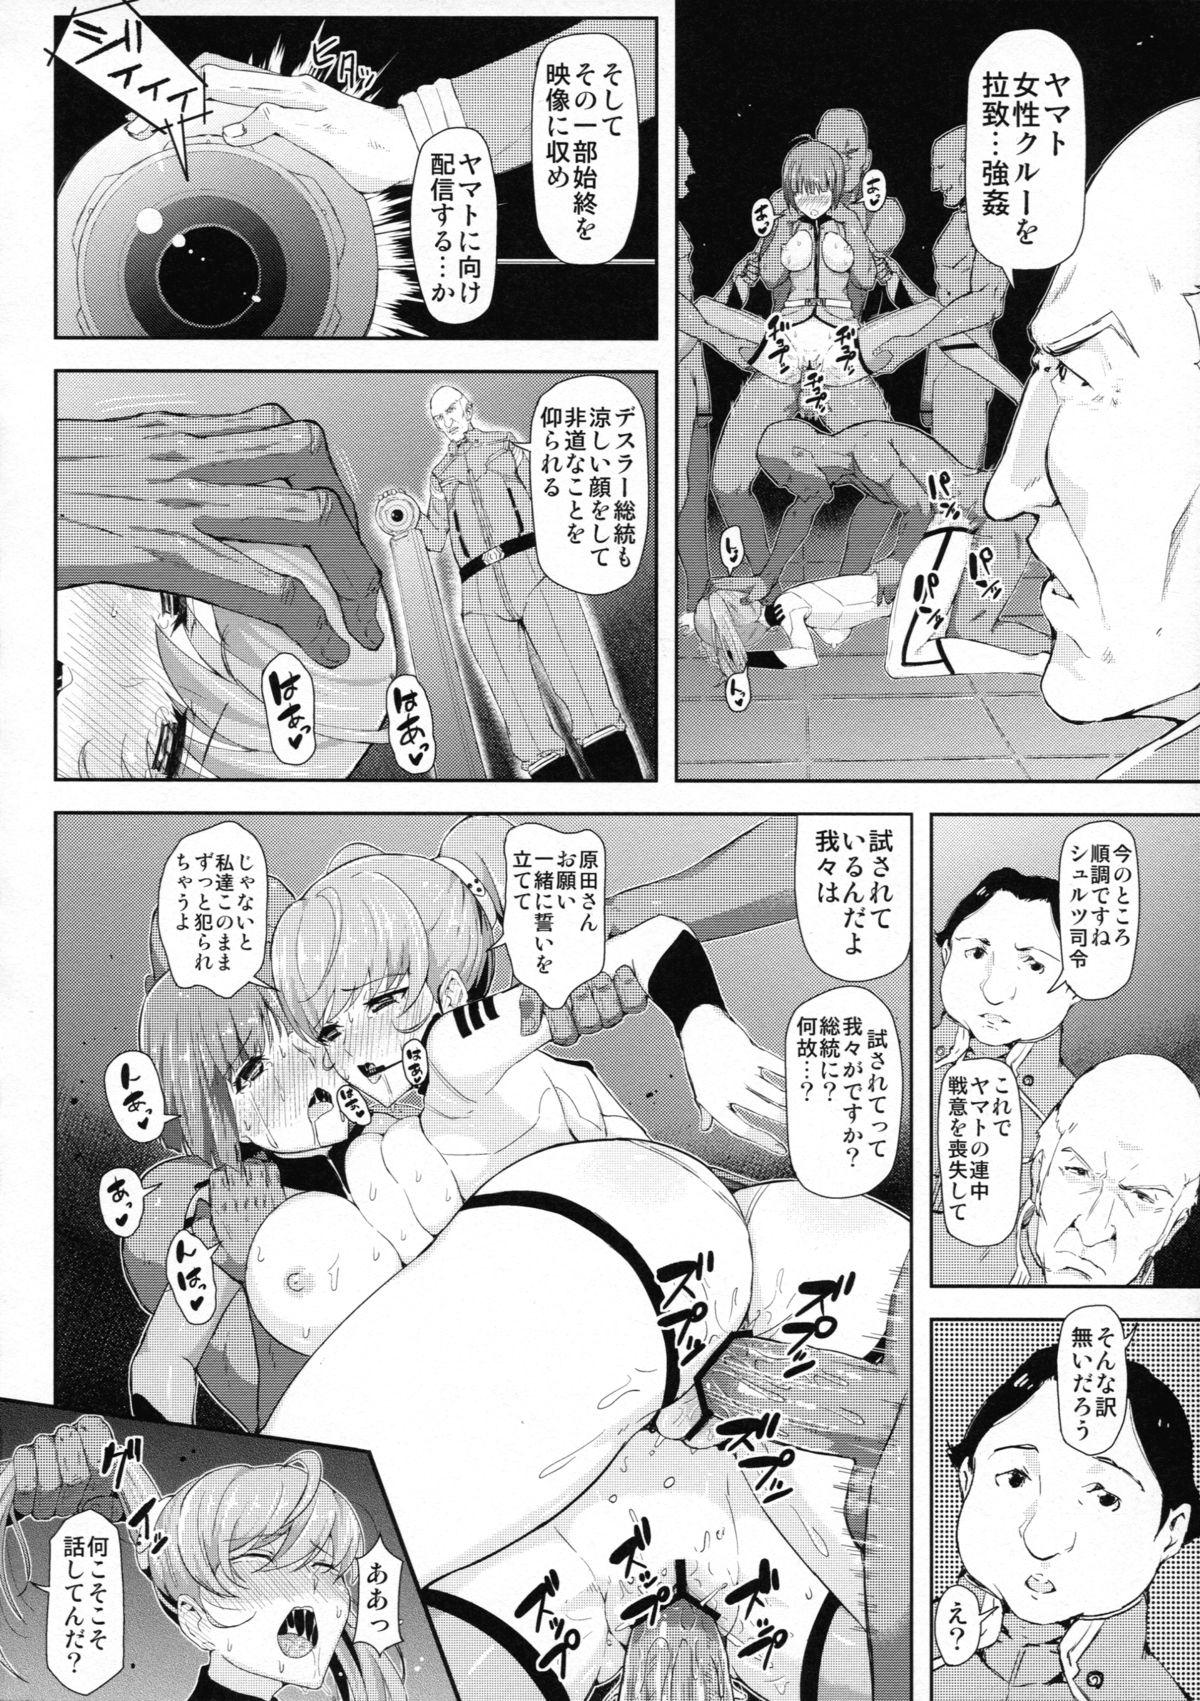 Nalgas Teron no Ryoshuu - Space battleship yamato Tied - Page 4